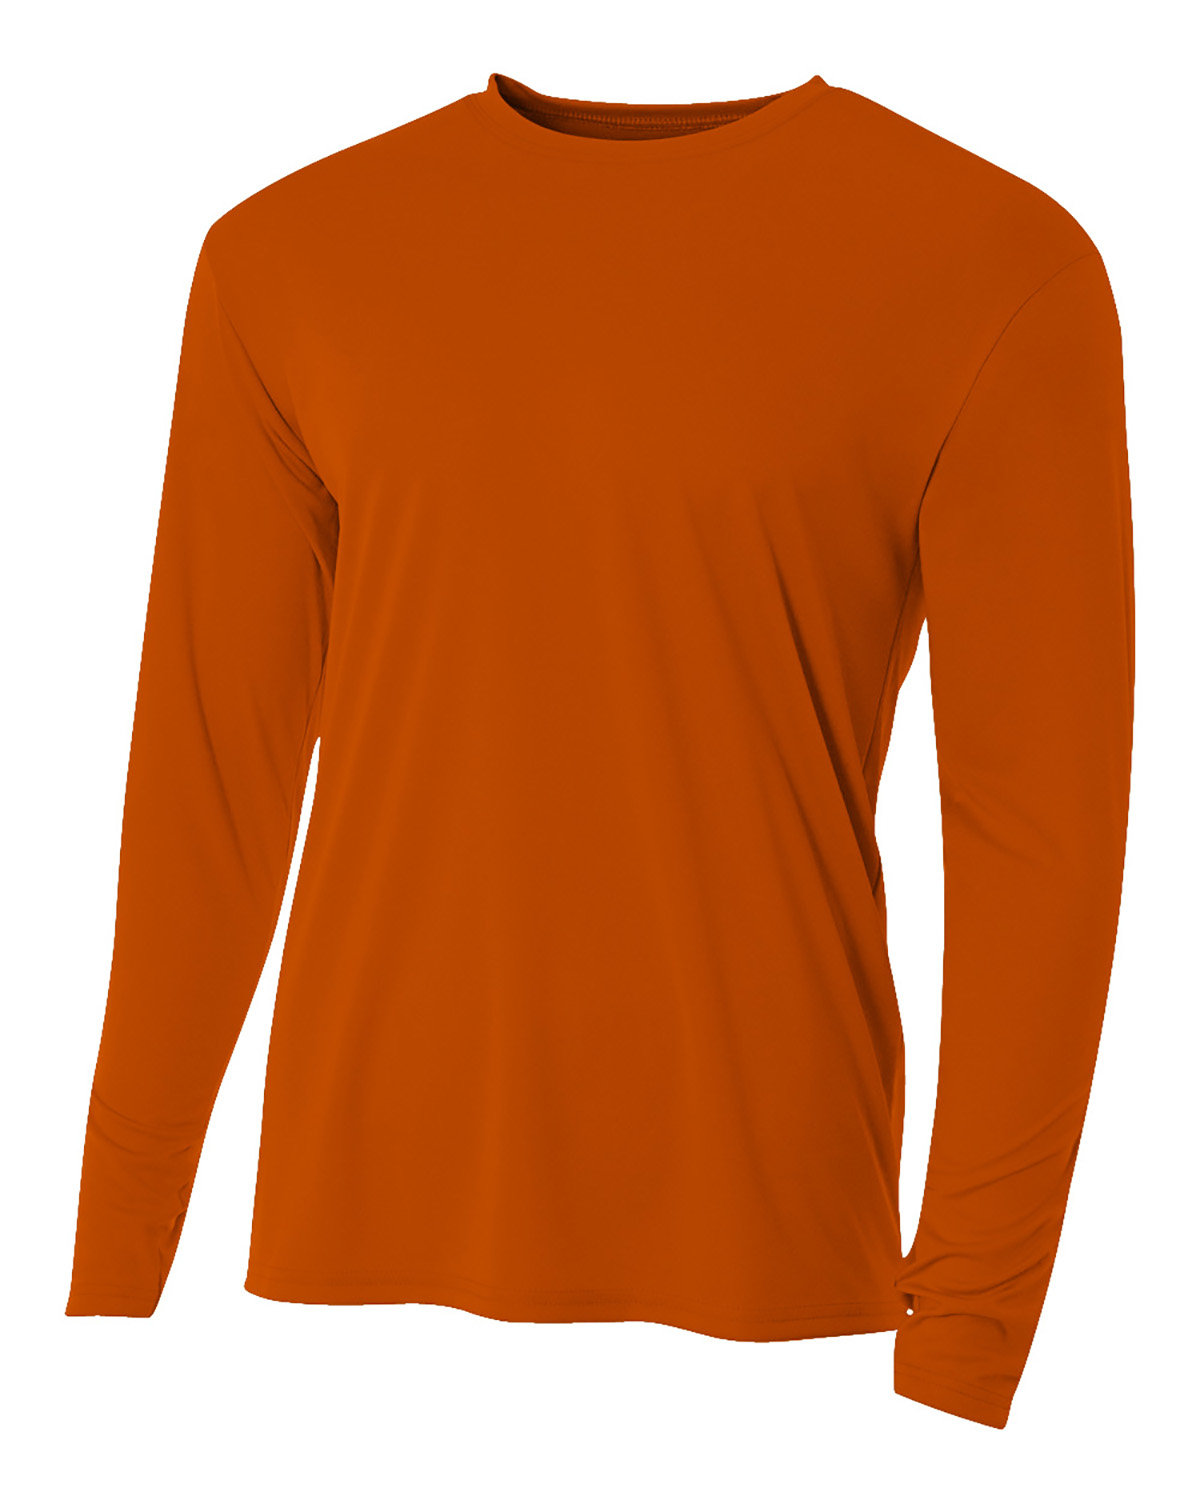 A4 Men's Cooling Performance Long Sleeve T-Shirt burnt orange 